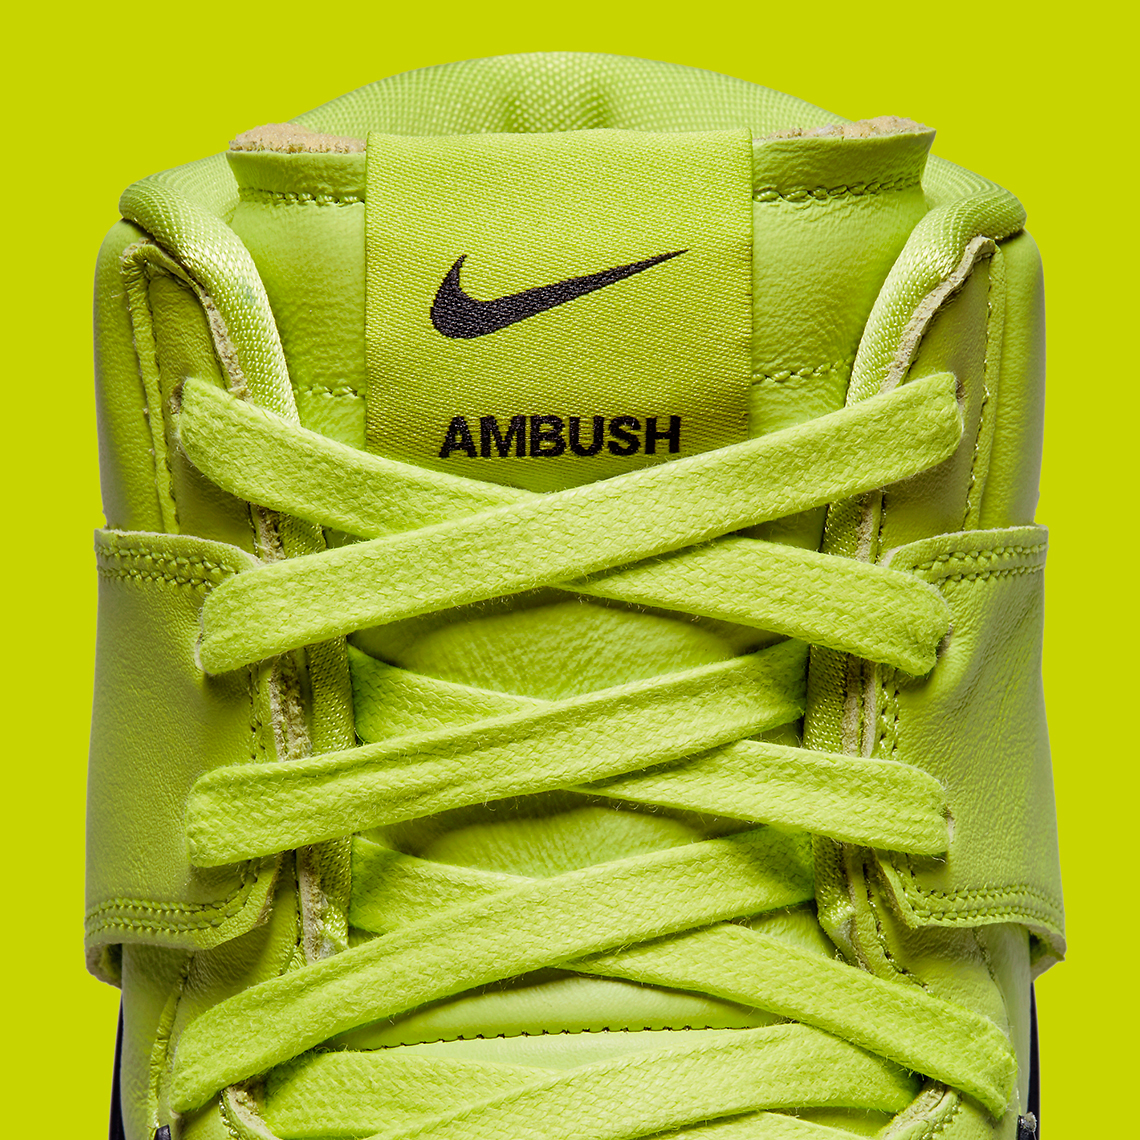 Ambush vintage nike presto running shoes for women cheap Atomic Green Cu7544 300 Release Date 8